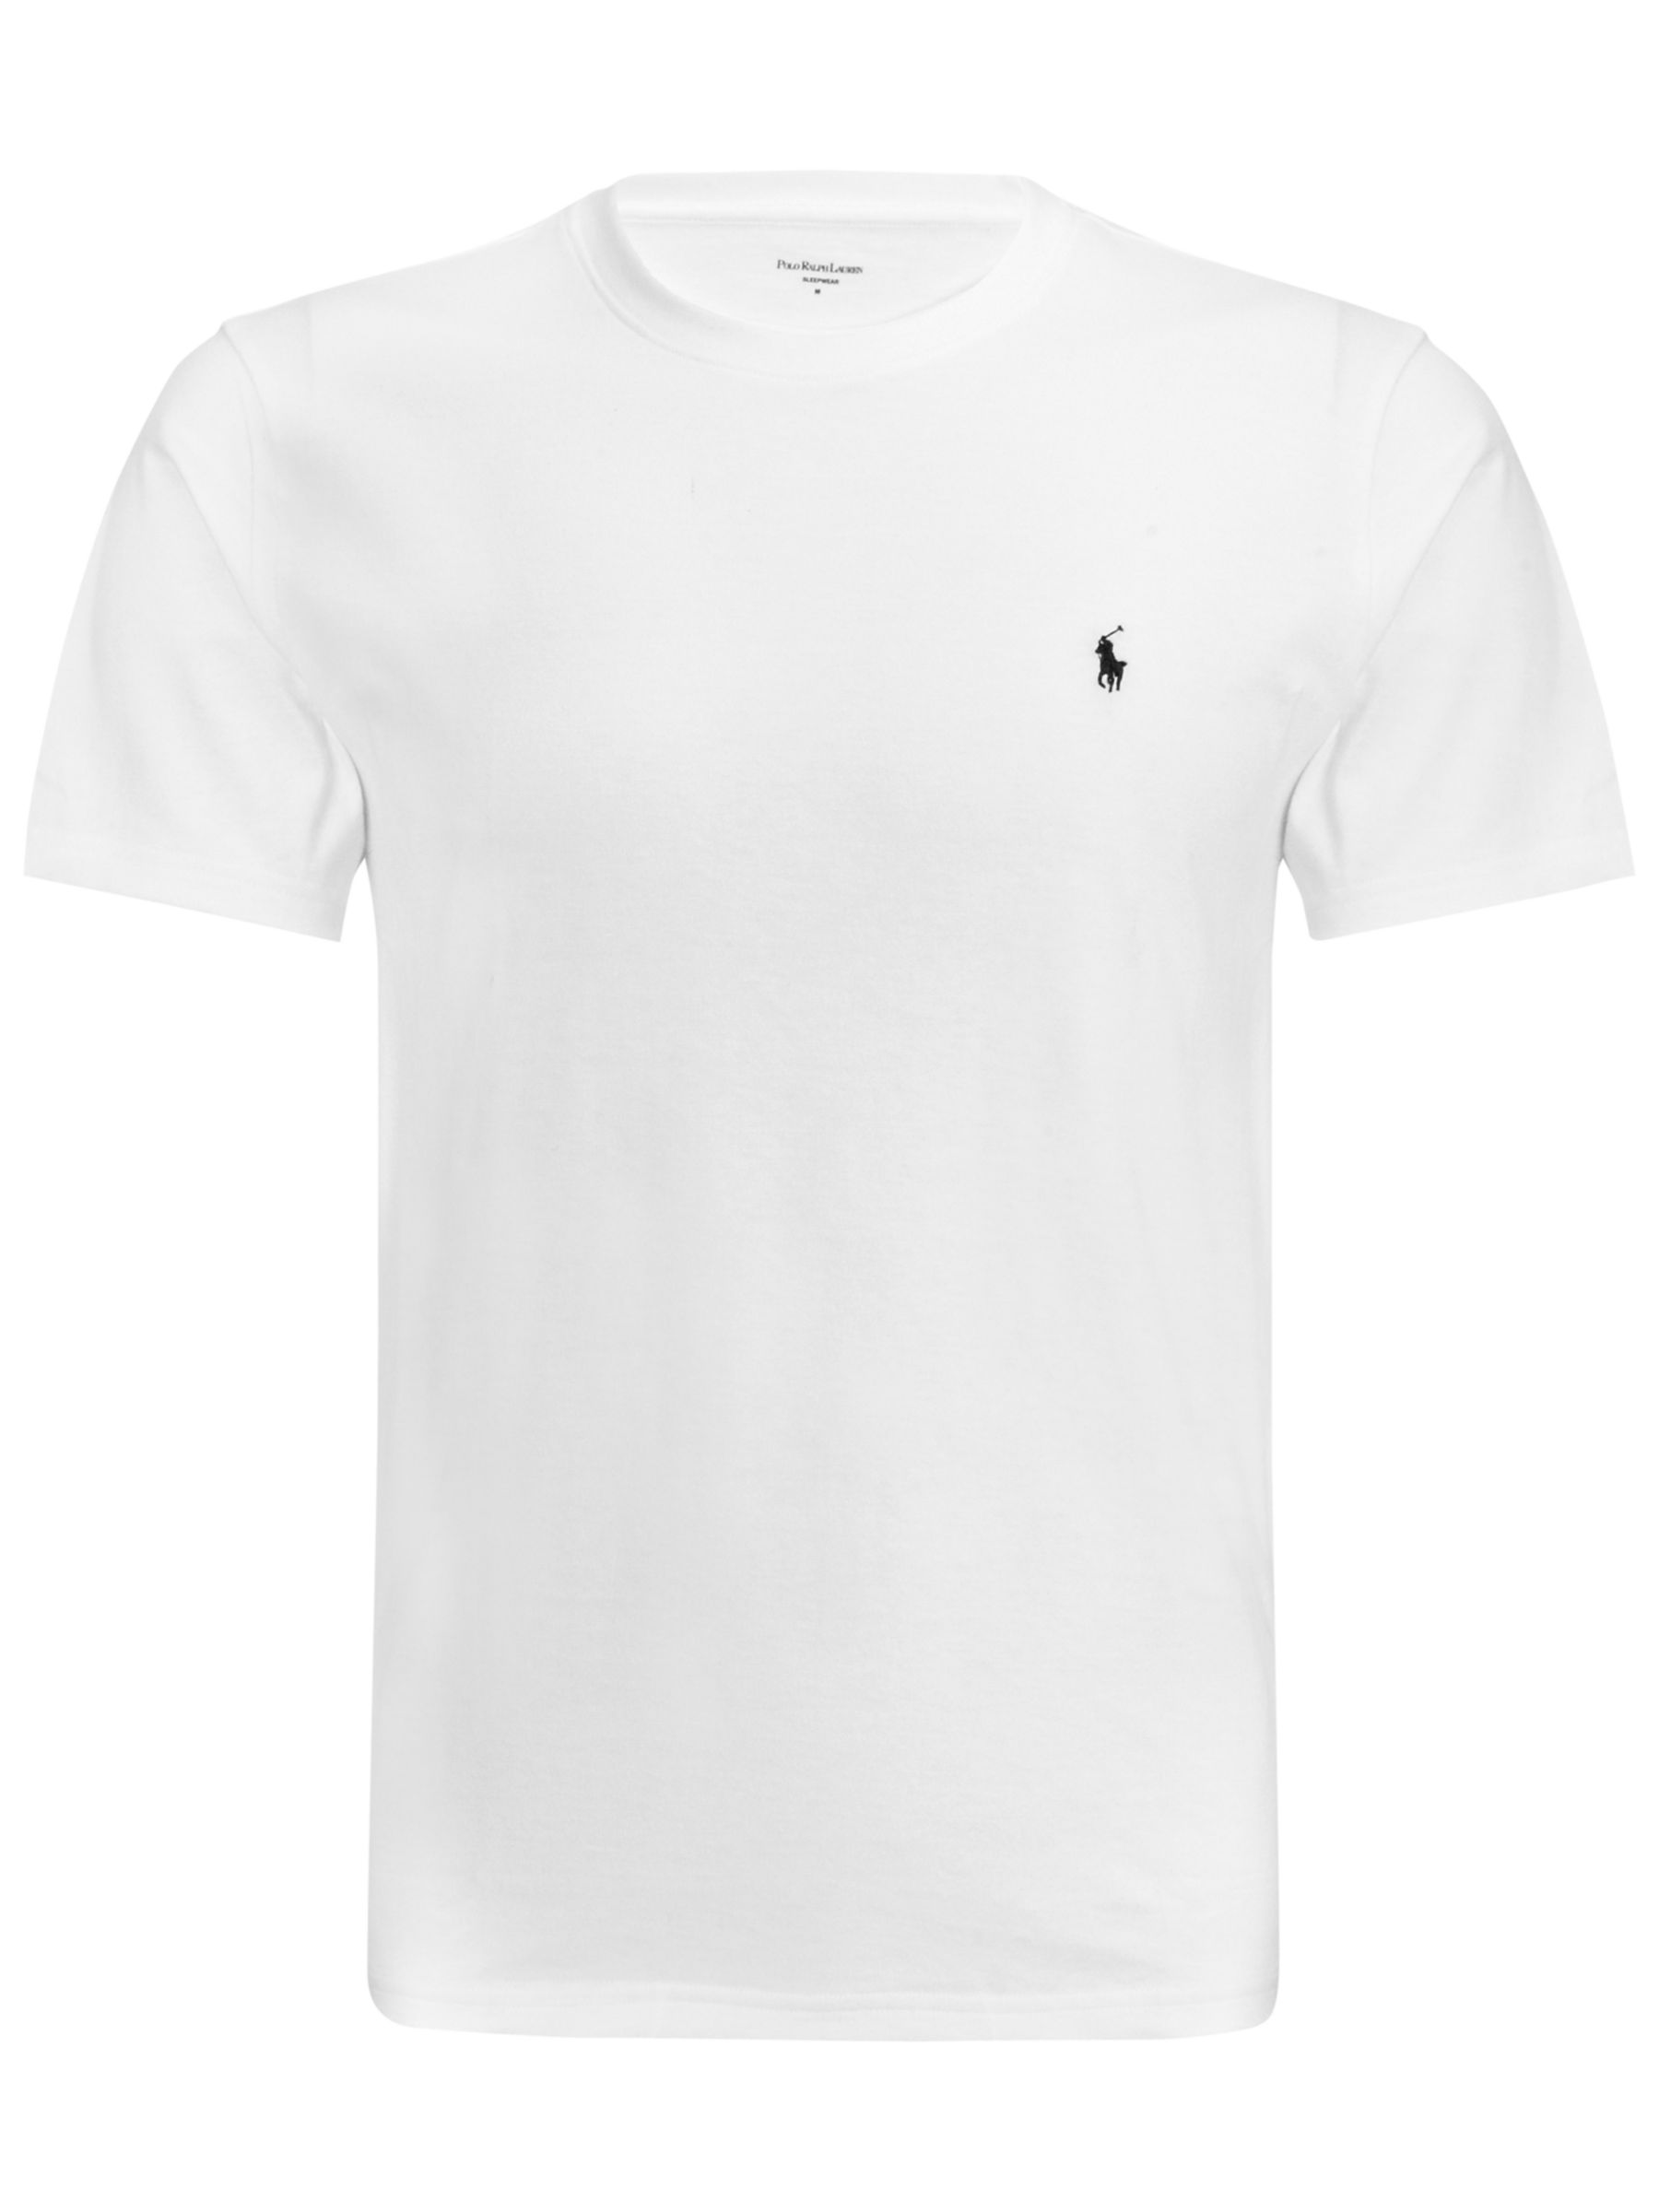 Polo Ralph Lauren Logo T-shirt, White, L